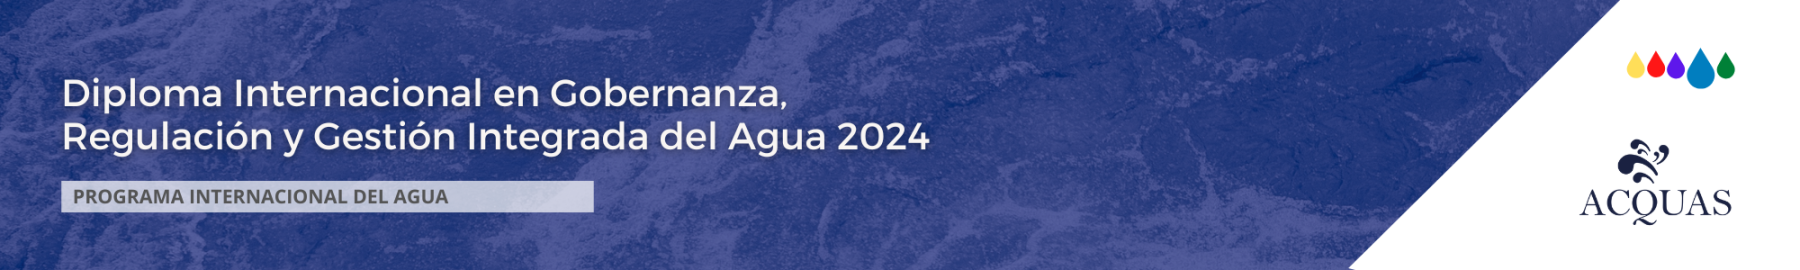 diploma 2024 banner web acquas